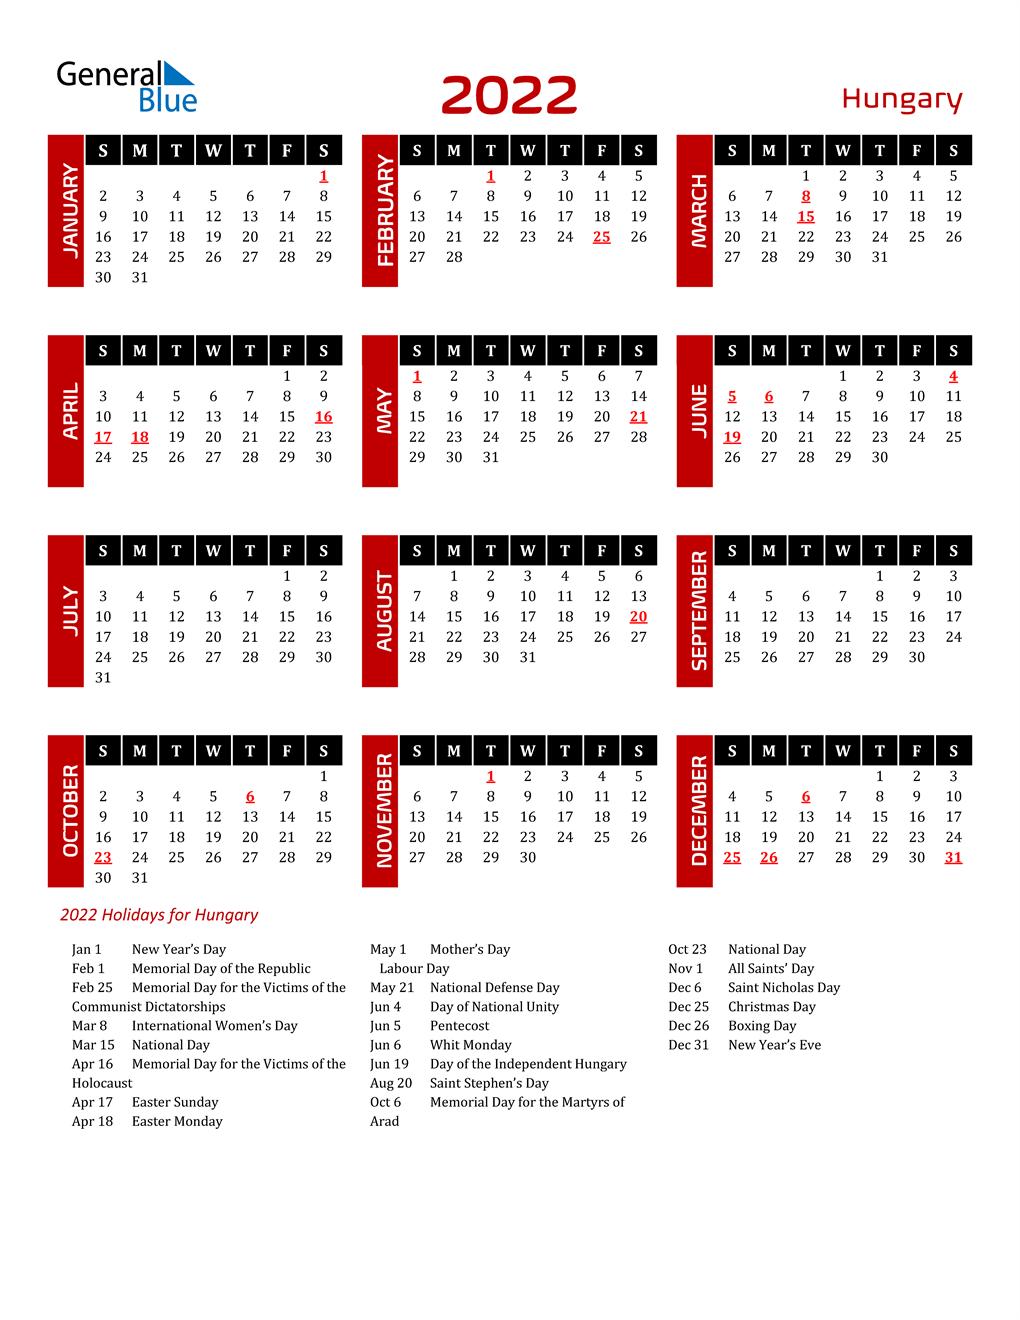 Download Hungary 2022 Calendar